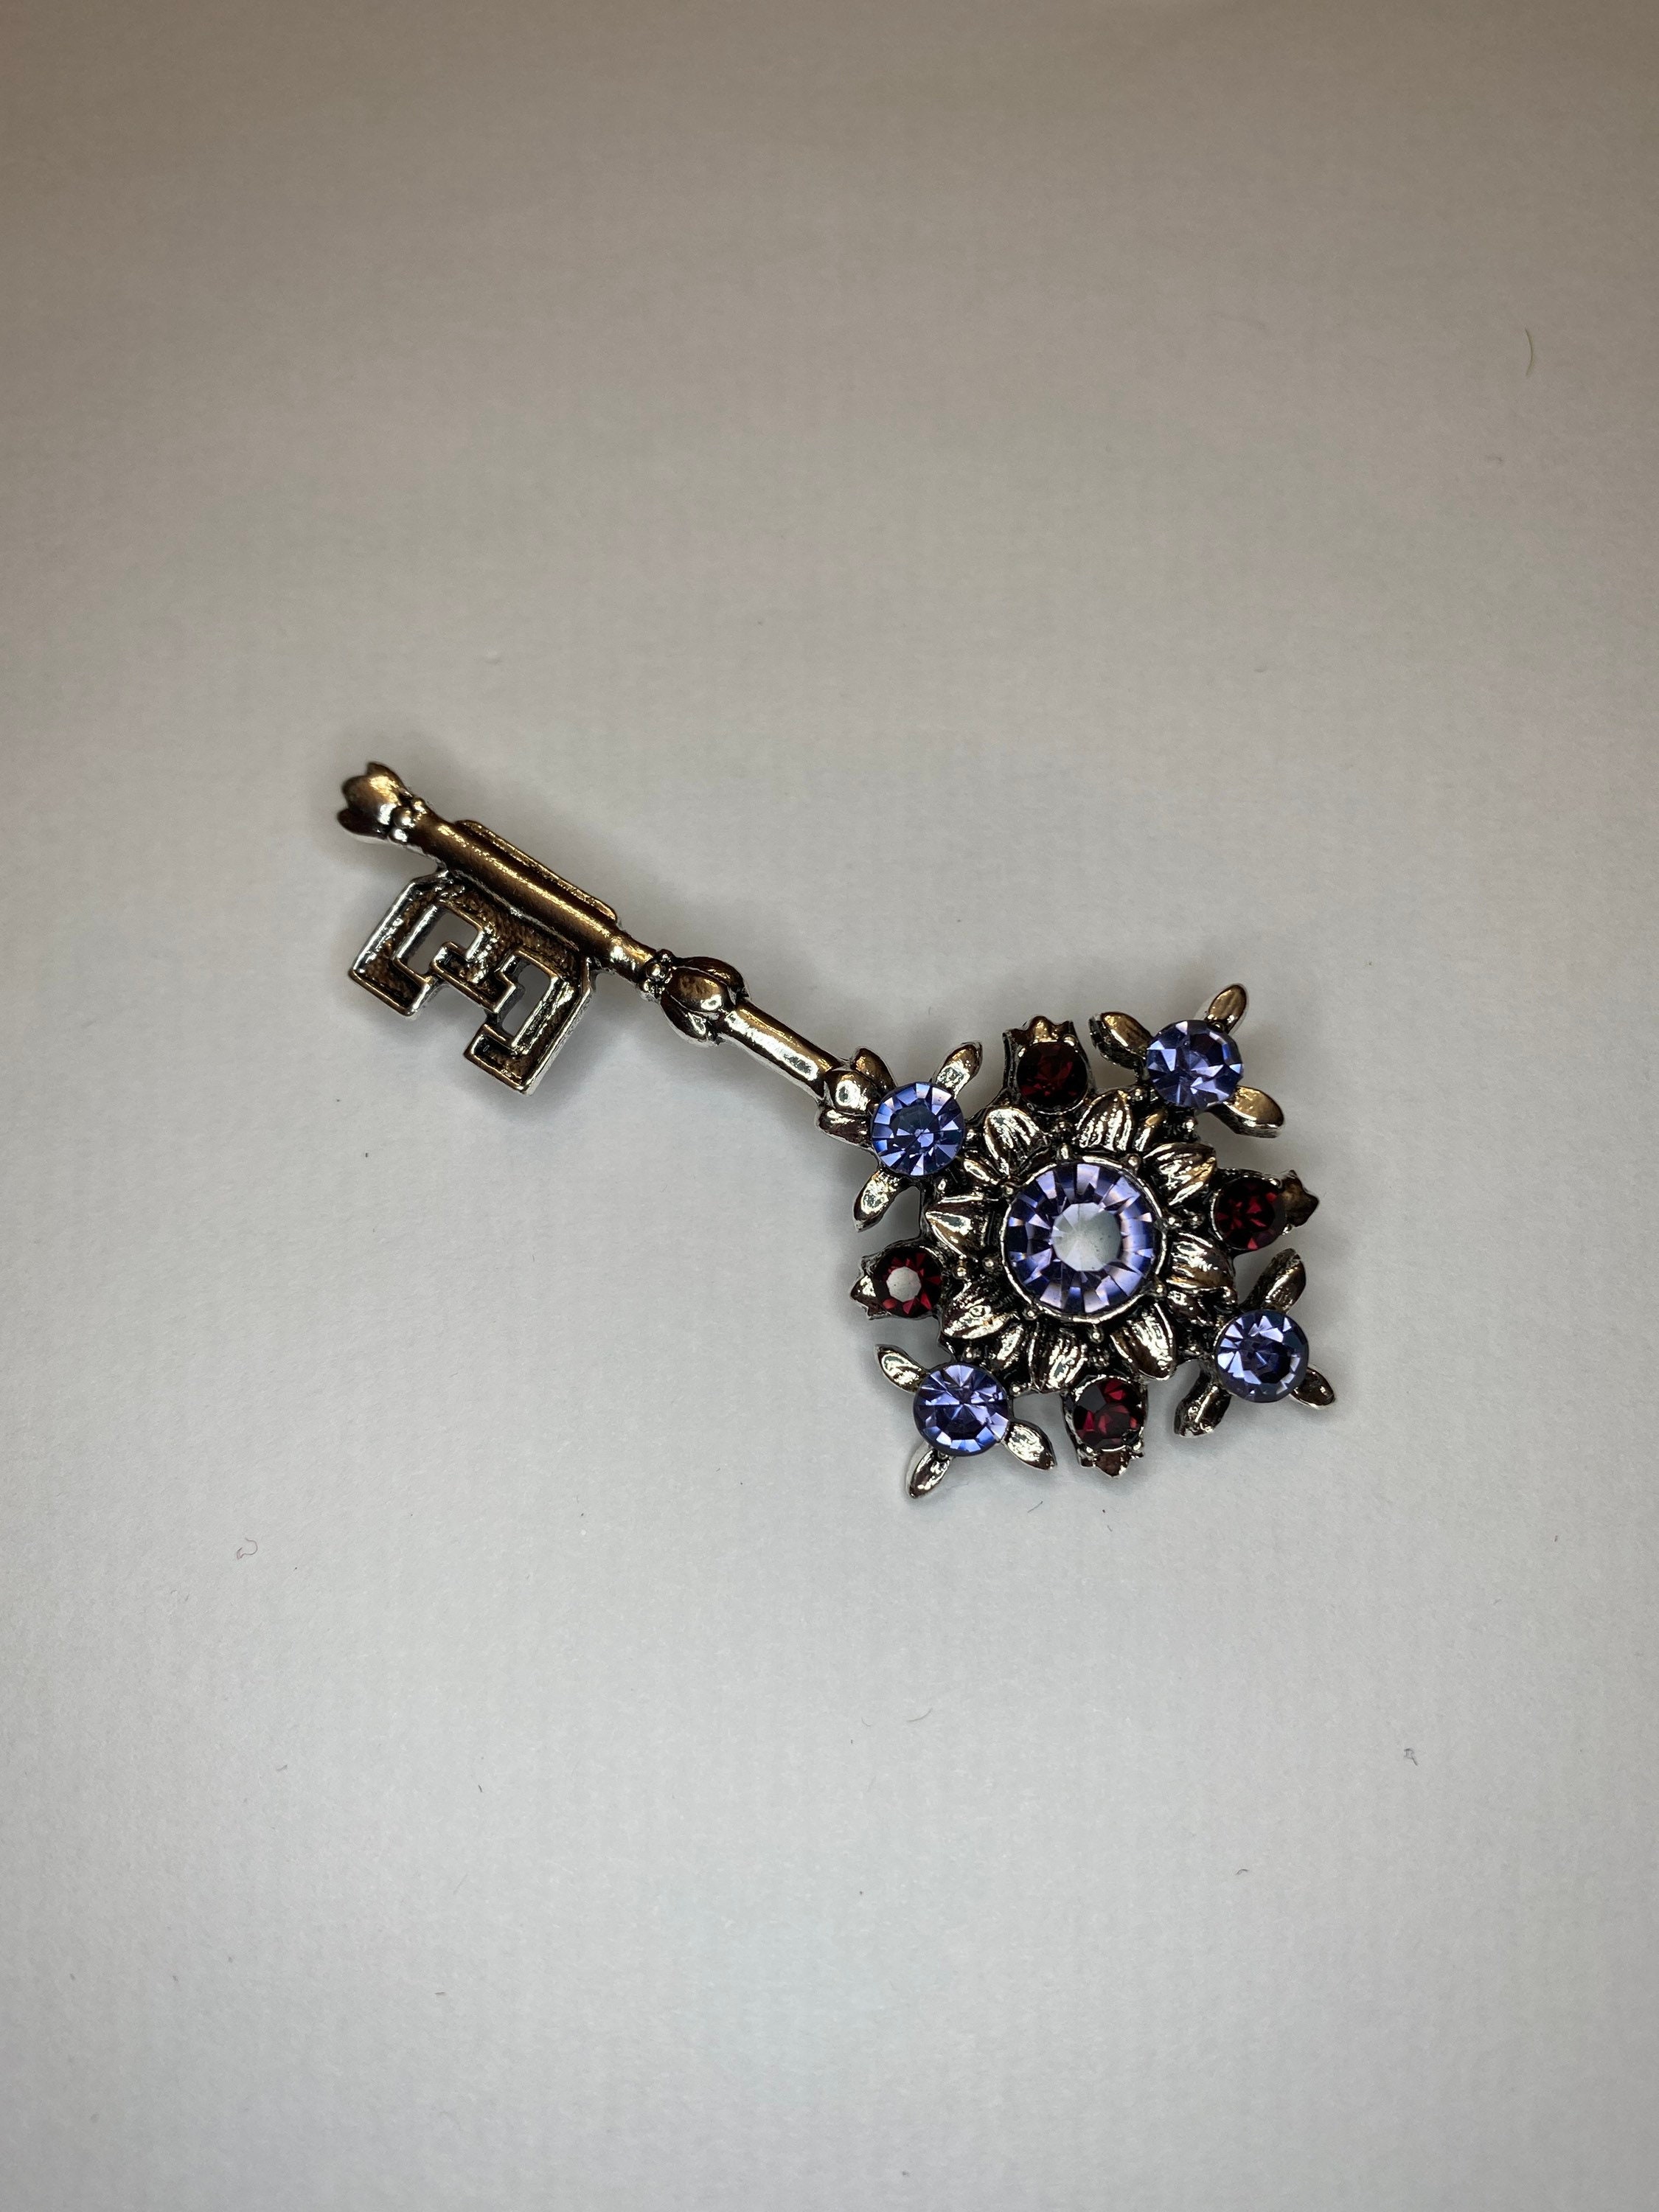 Unique Vintage-inspired Skeleton Key Rhinestone Brooch Pin Key 